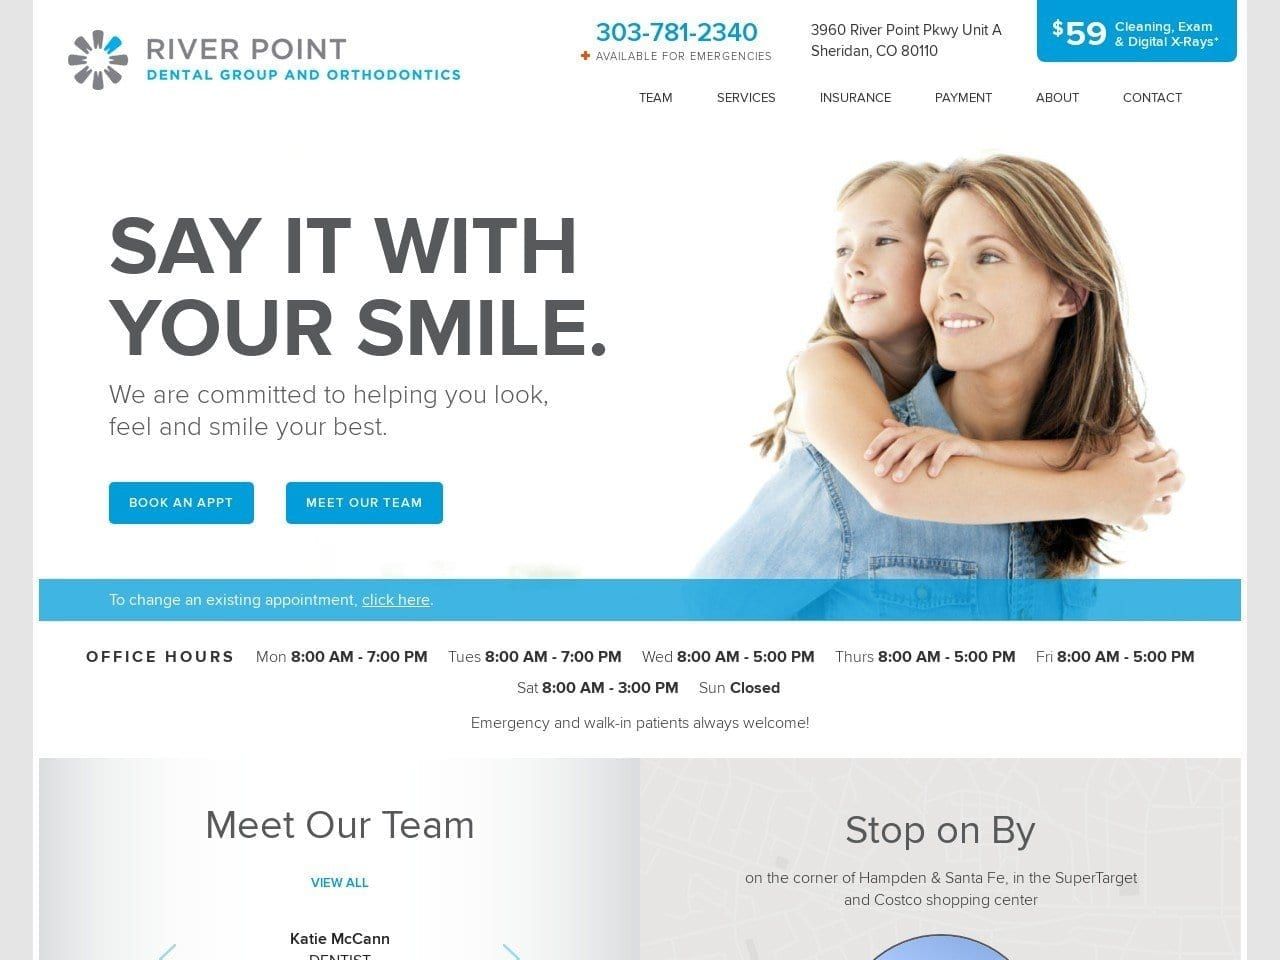 River Point Dental Group Website Screenshot from riverpointdentalgroup.com